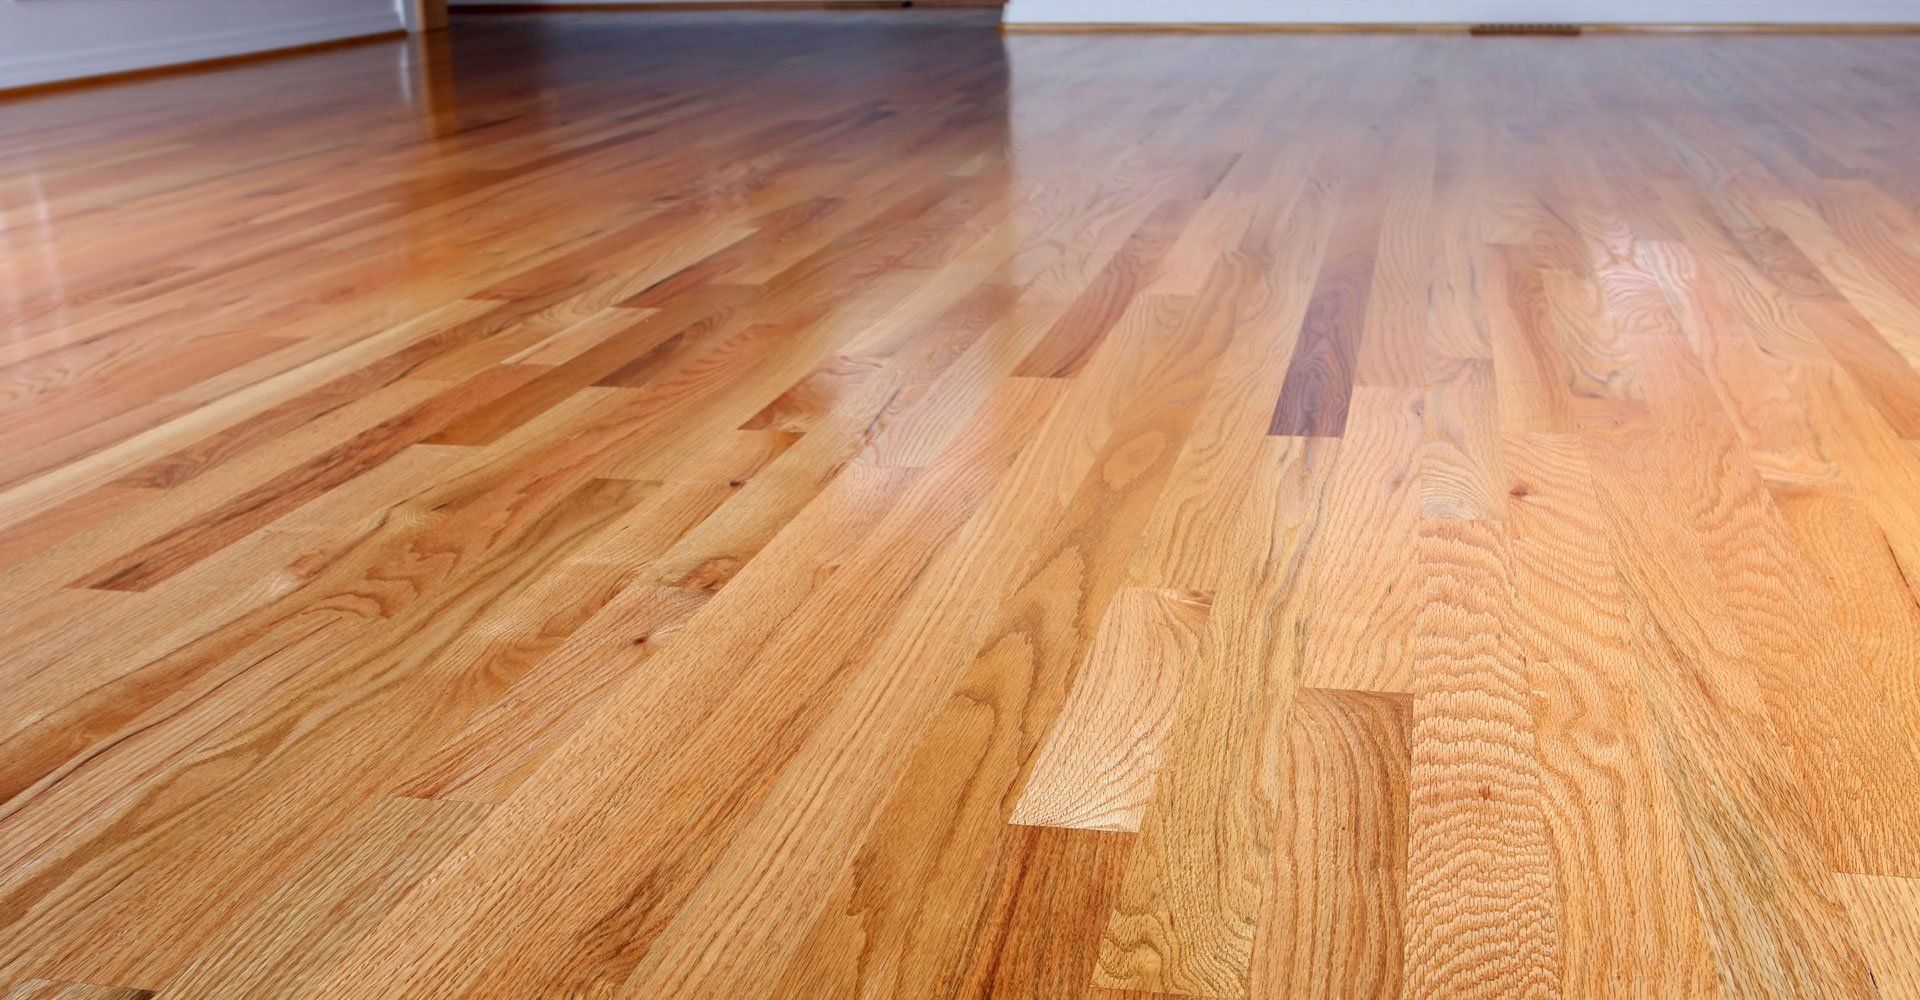 Hardwood pattern floor